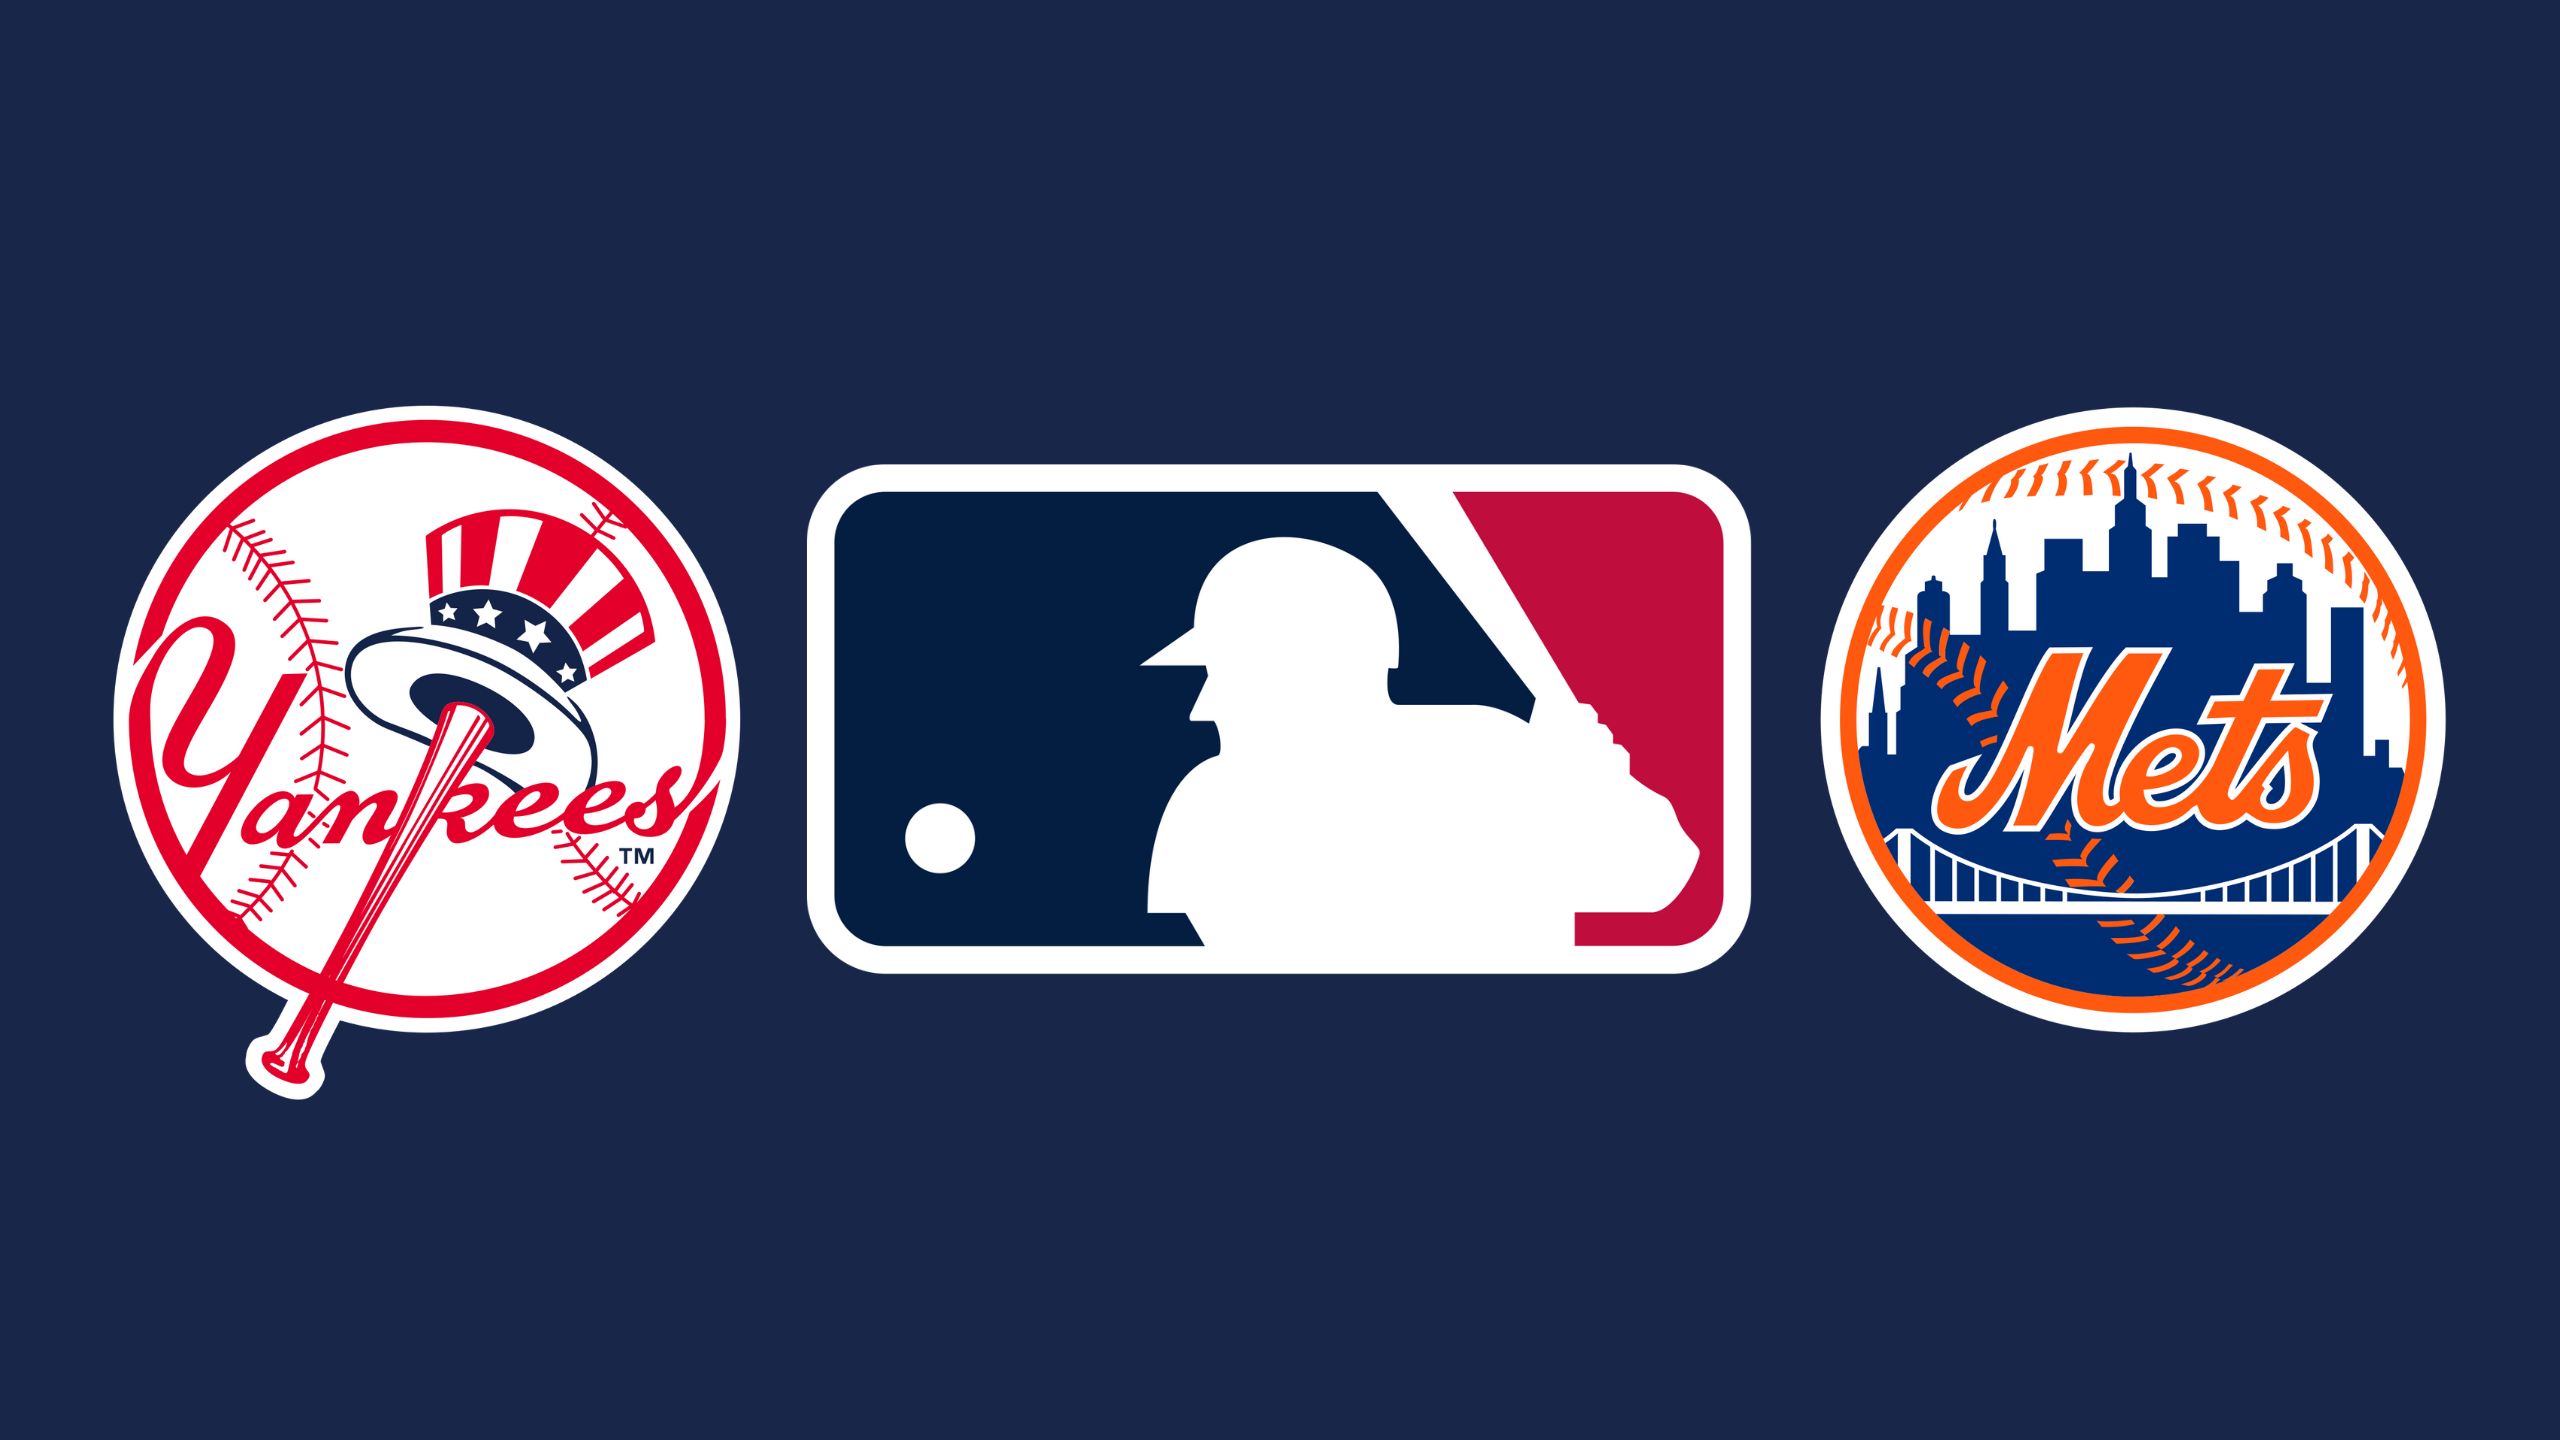 Yankees and Mets Logos